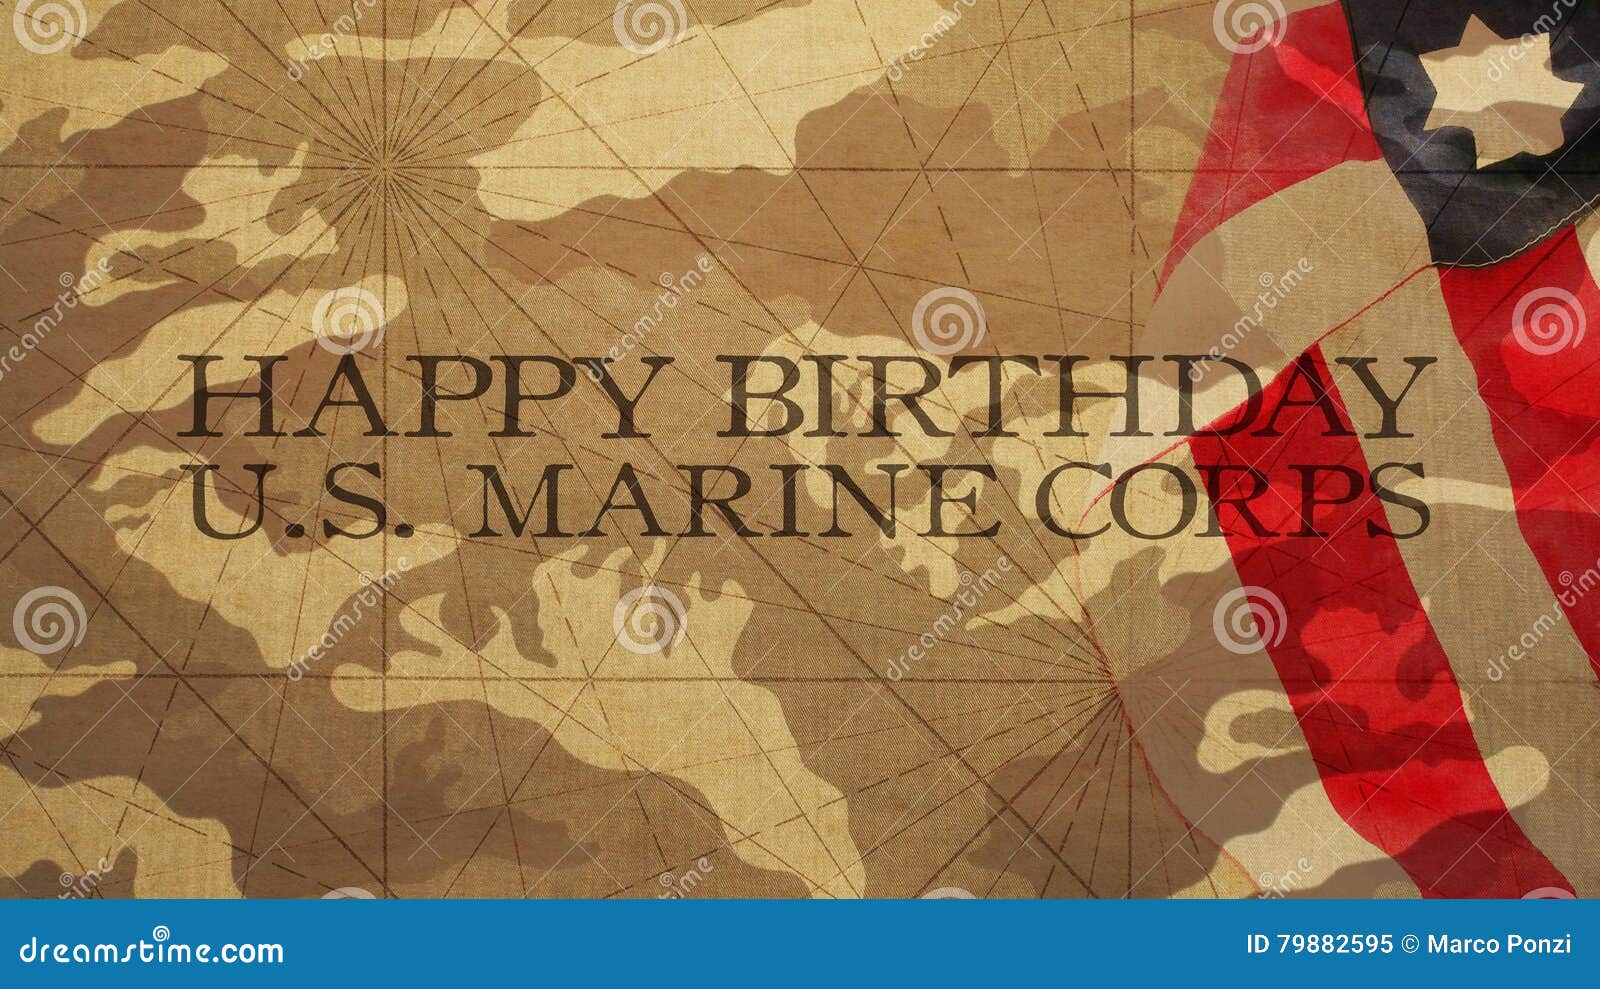 happy birthday us marine corps